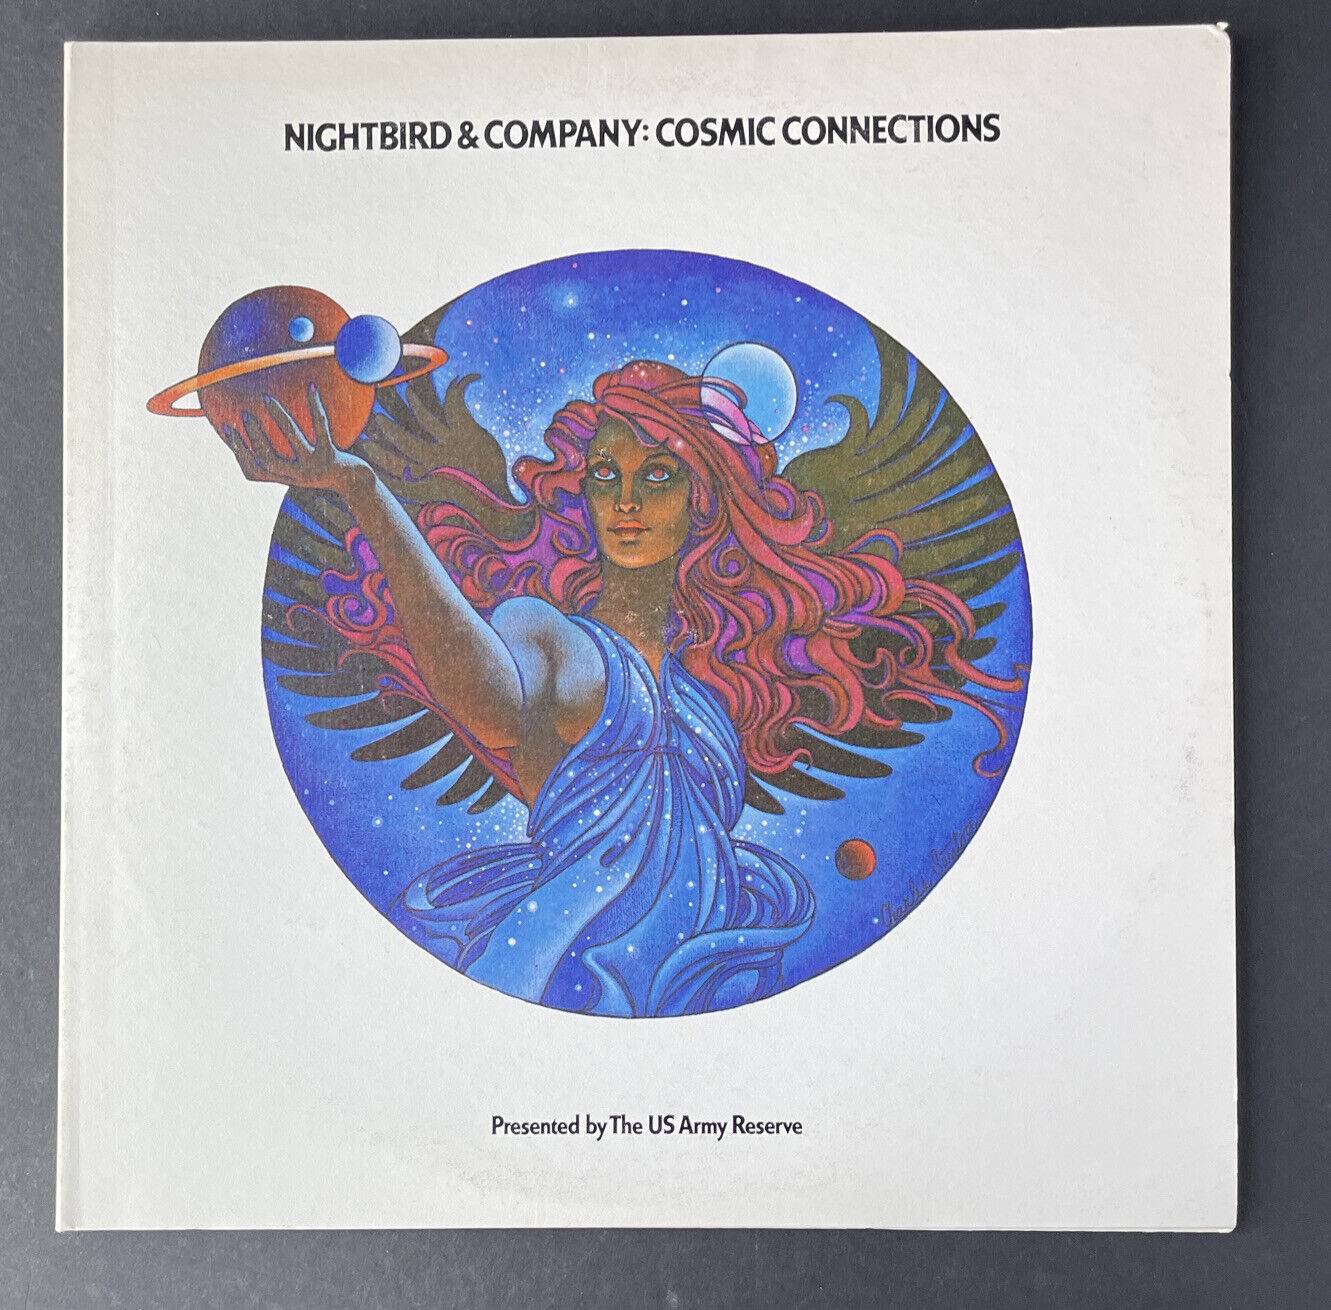 Vintage 1974 NIGHTBIRD COSMIC CONNECTIONS - US Army Reserve Vinyl Record Album